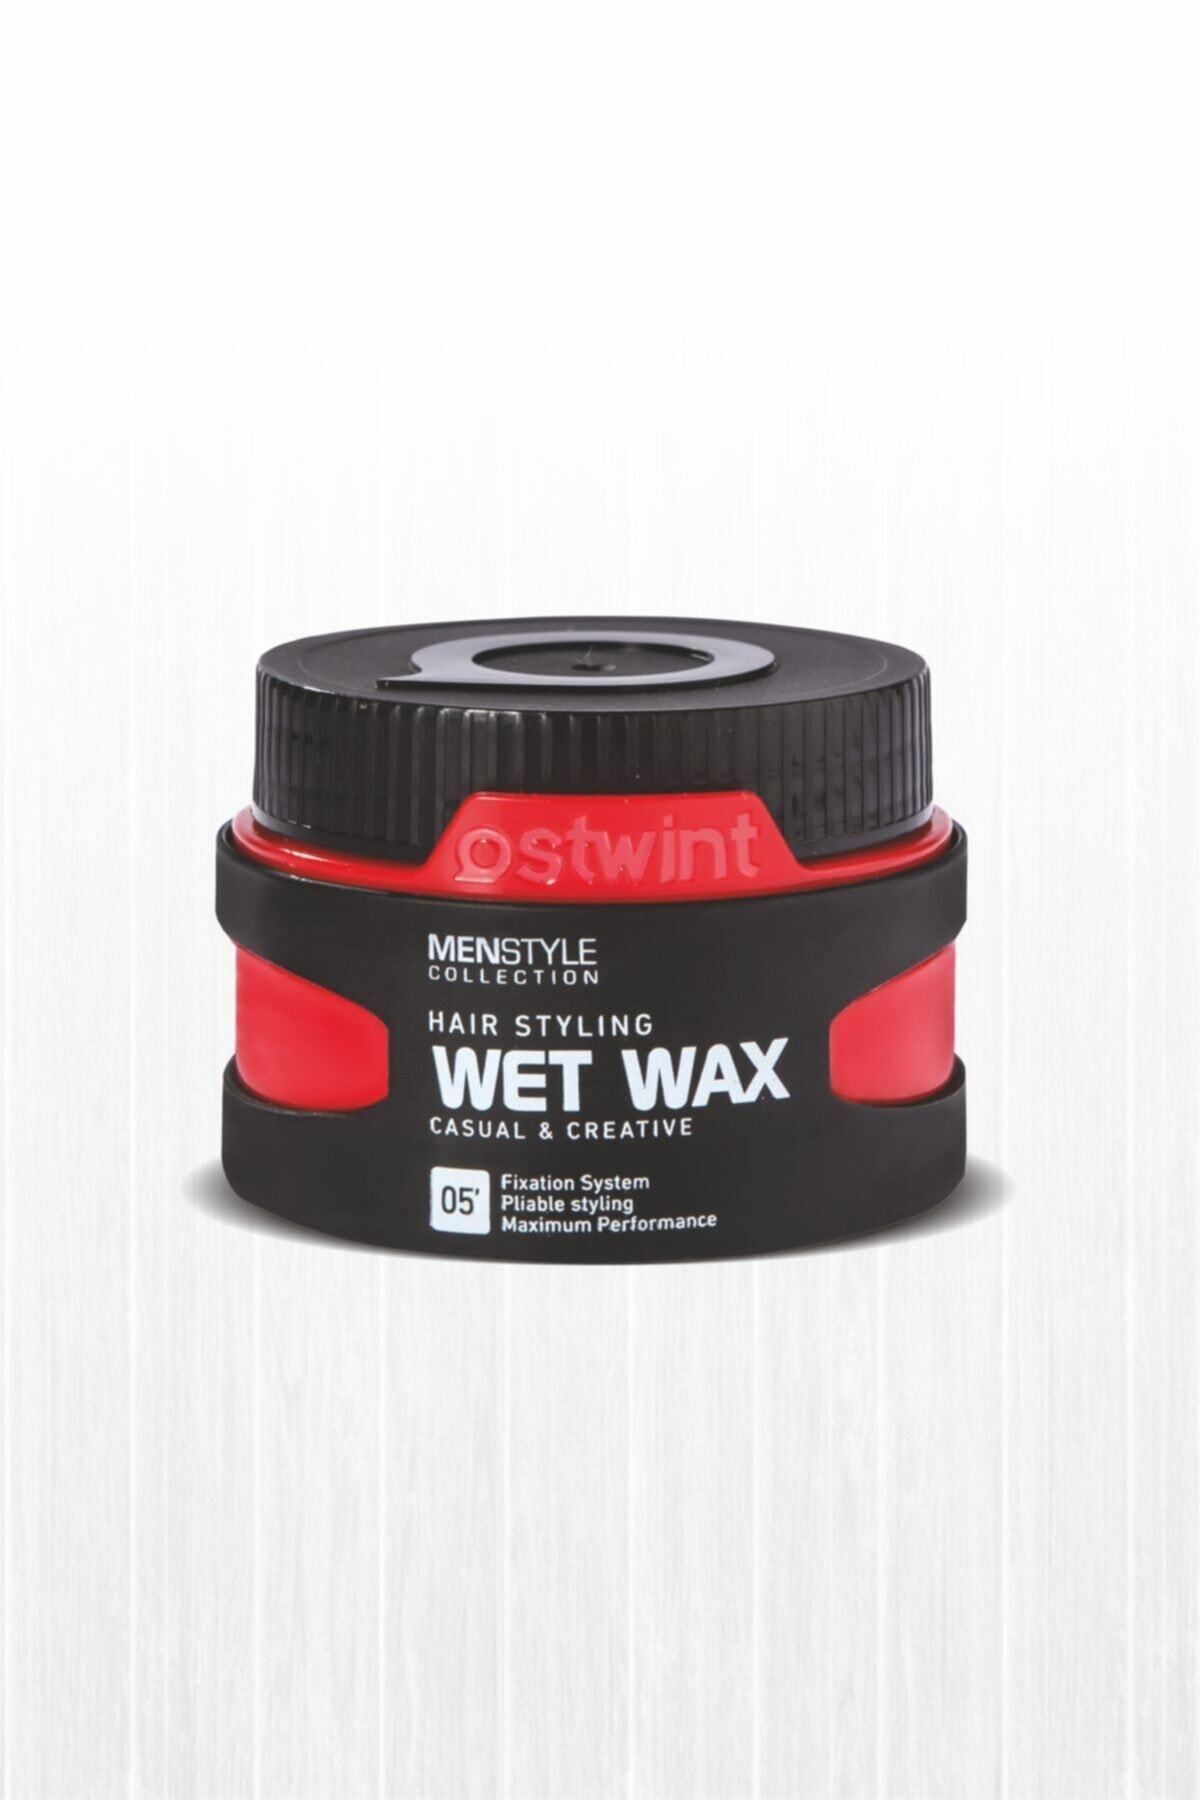 Ostwint Menstyle Collection Saç Şekillendirici Wet Wax No5 150 ml